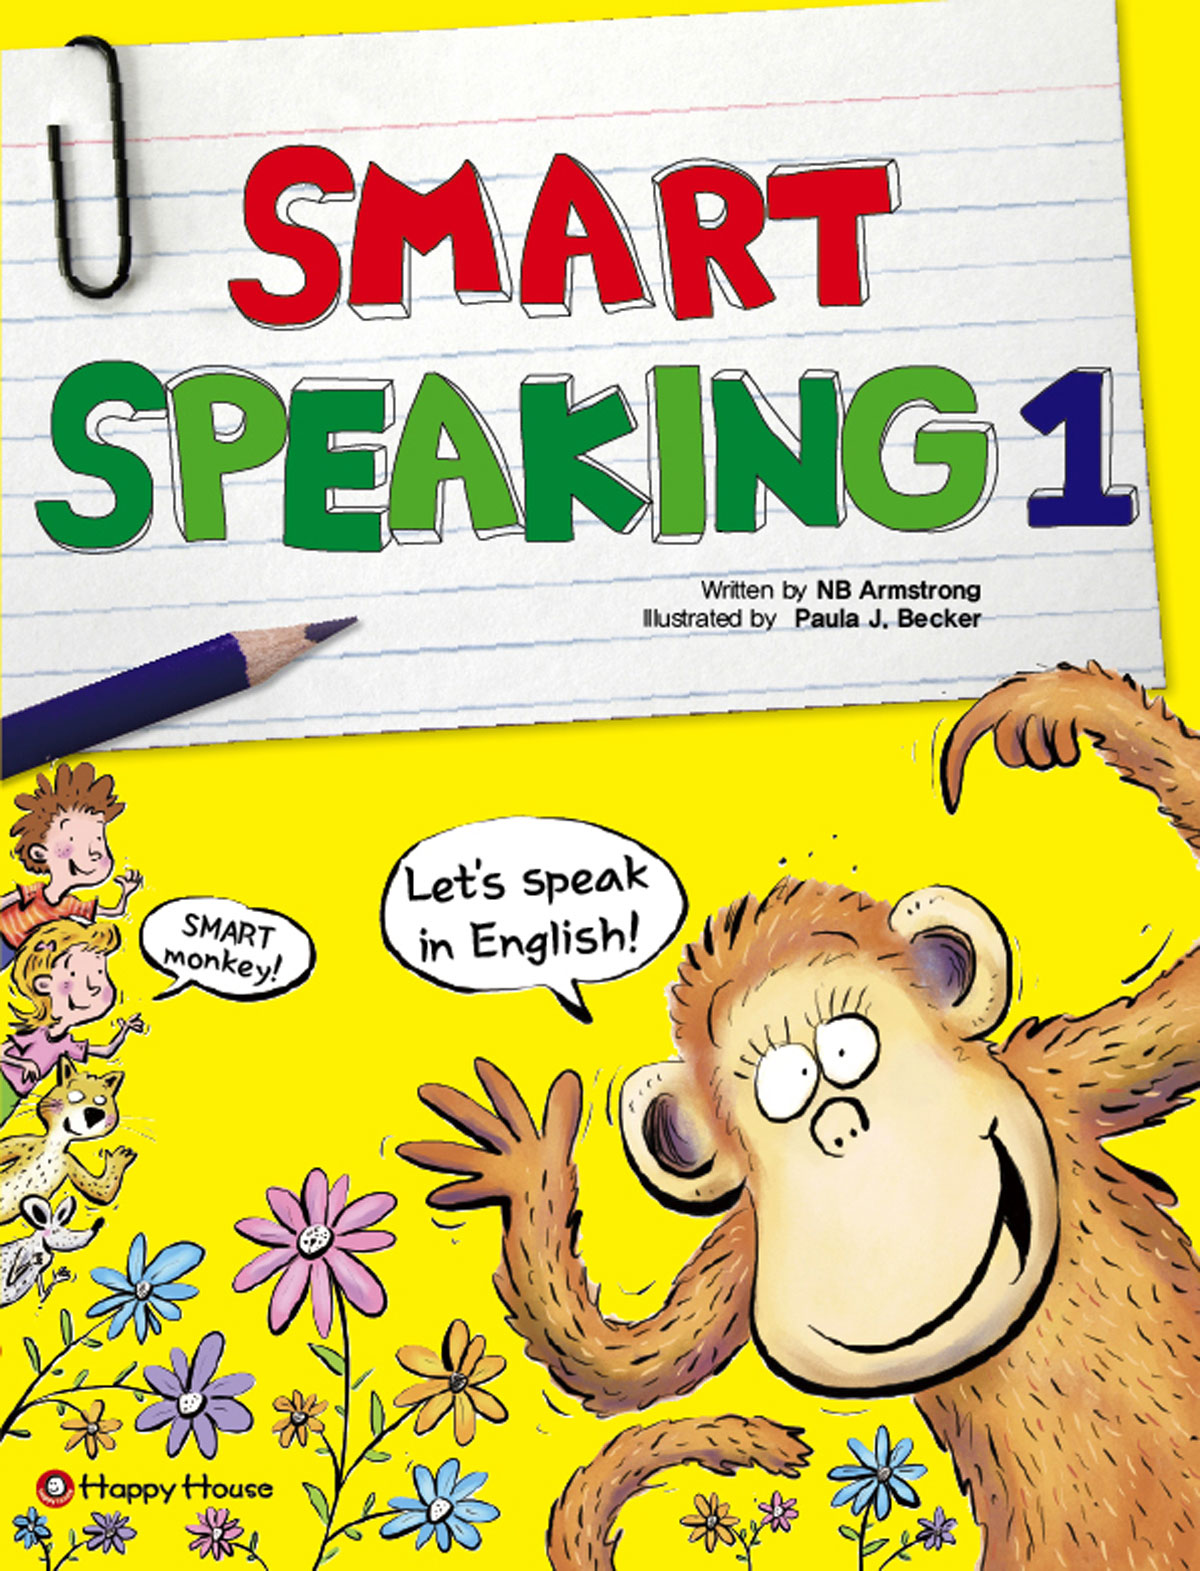 Smart Speaking 1